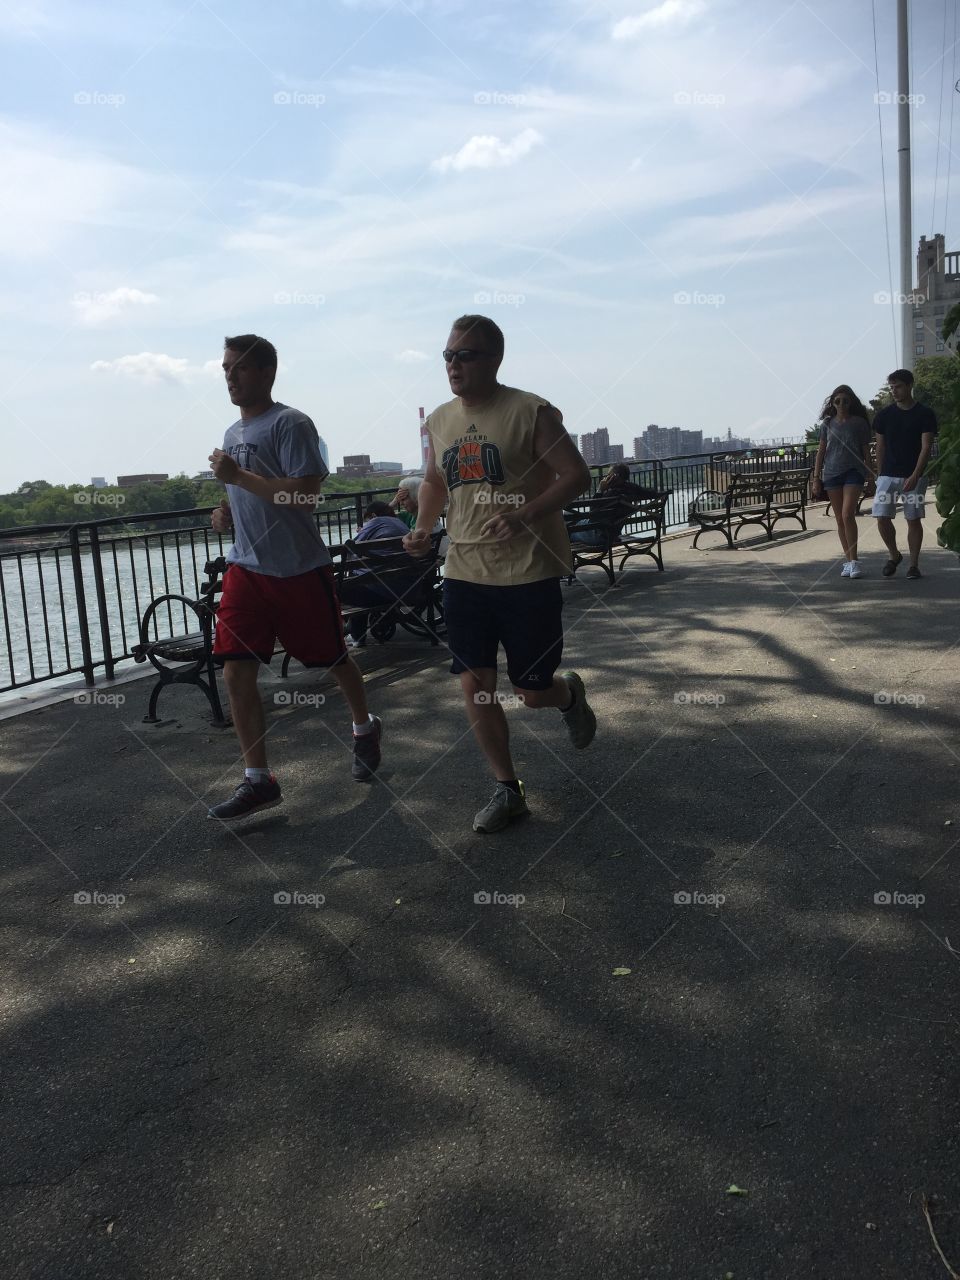 NYC runners 